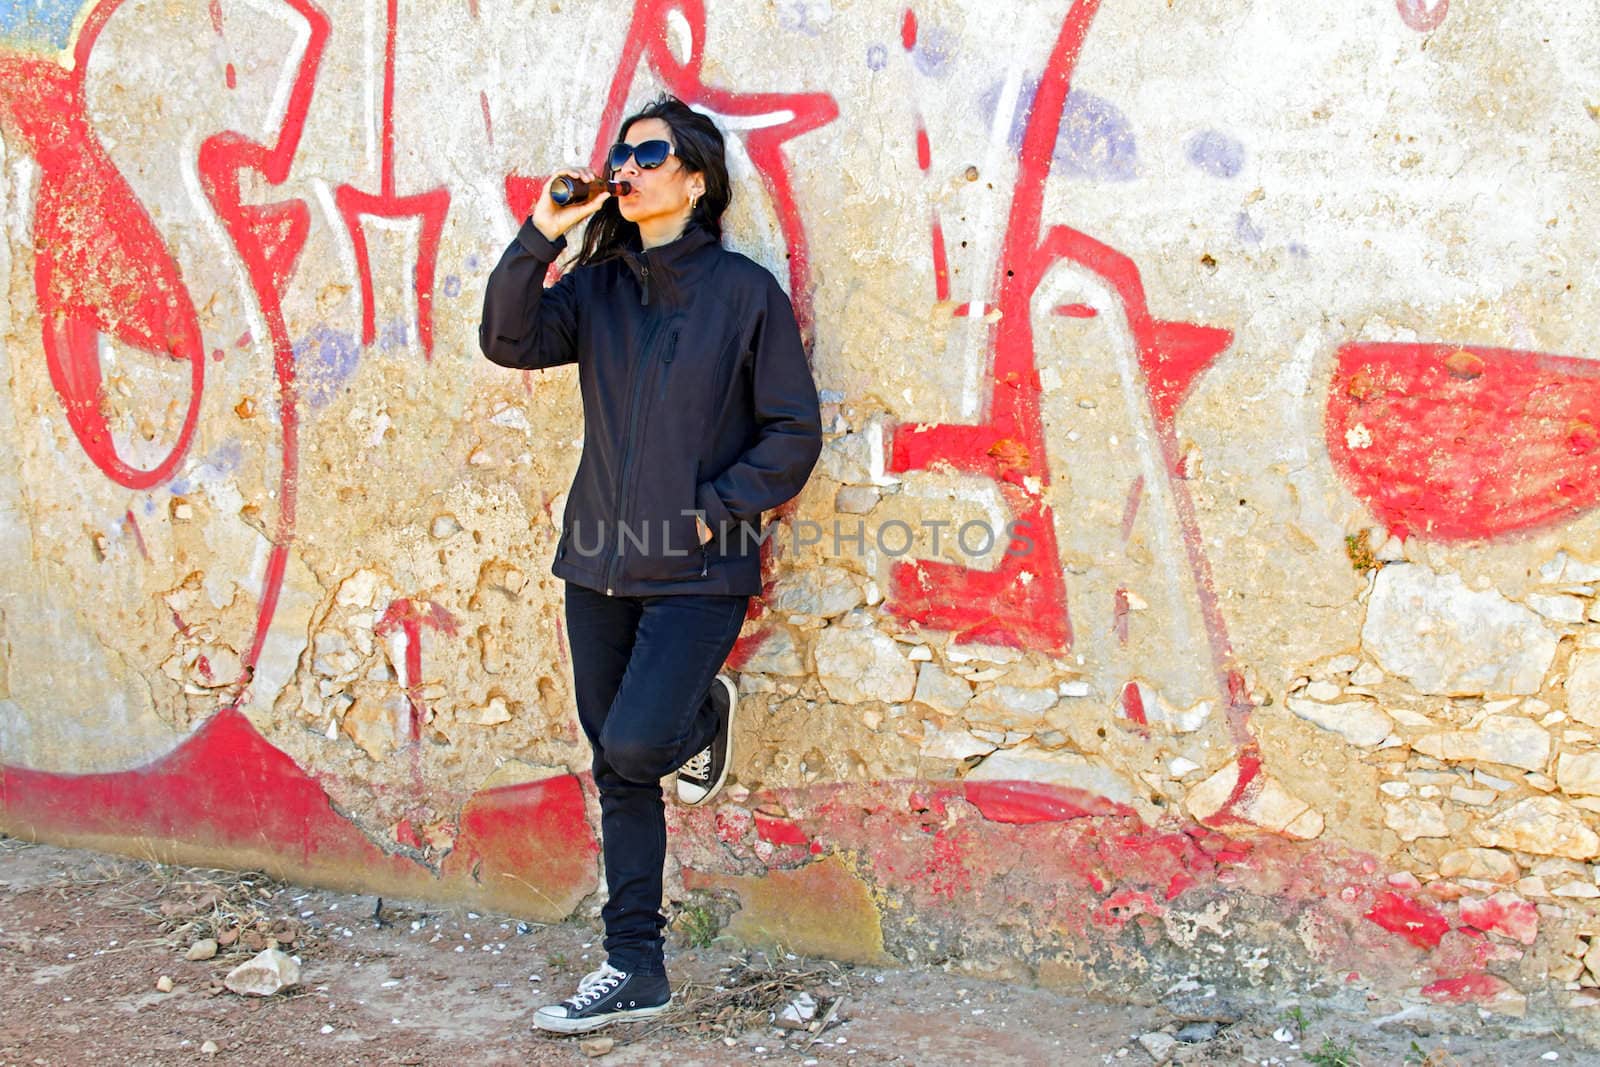 Woman in black drinking beer at a graffiti wall